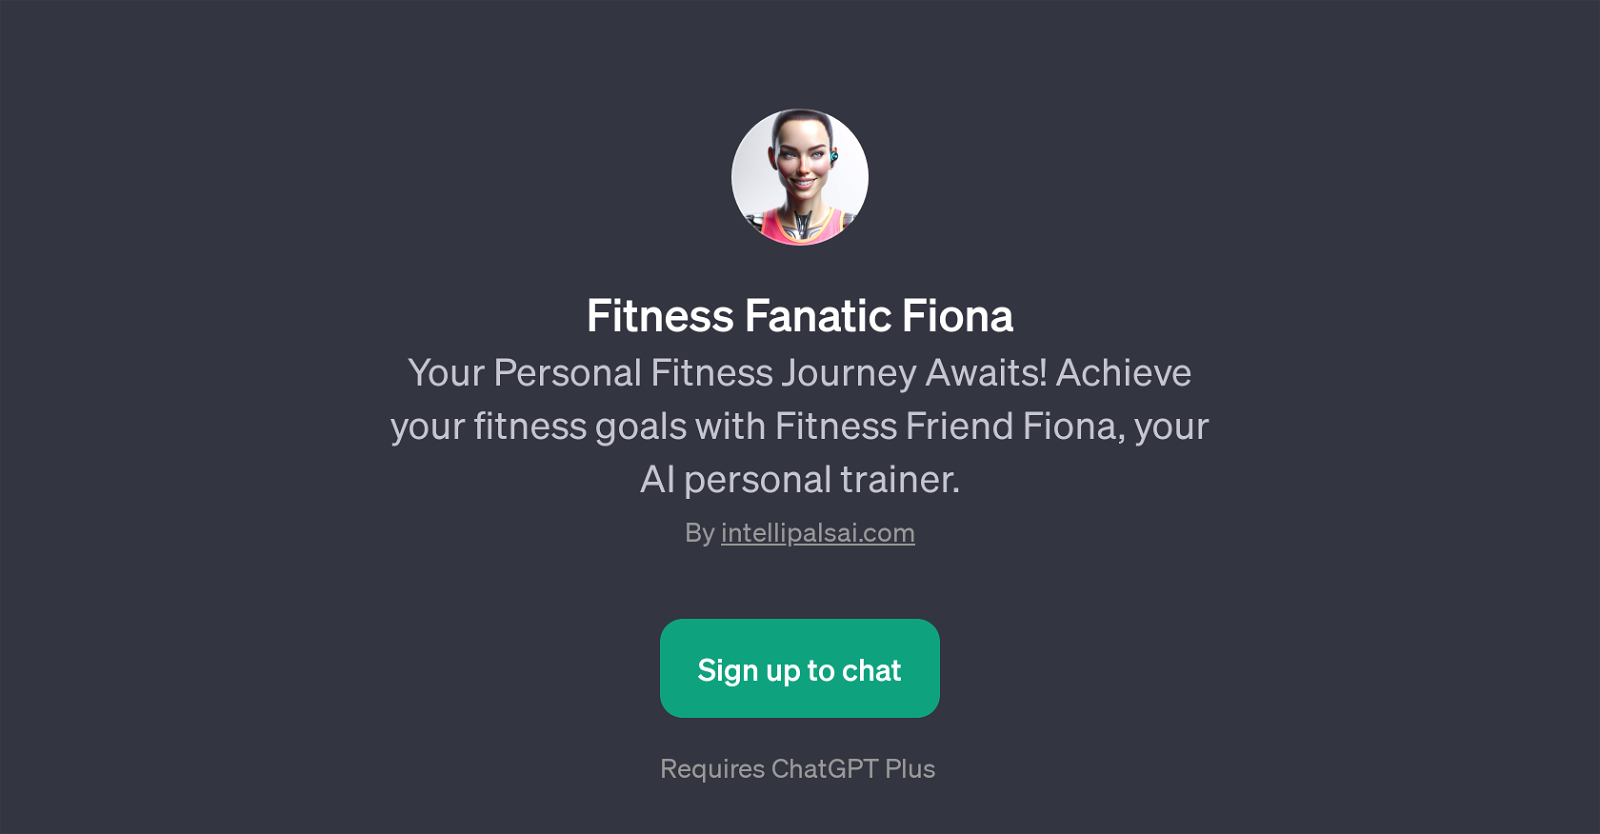 Fitness Fanatic Fiona website